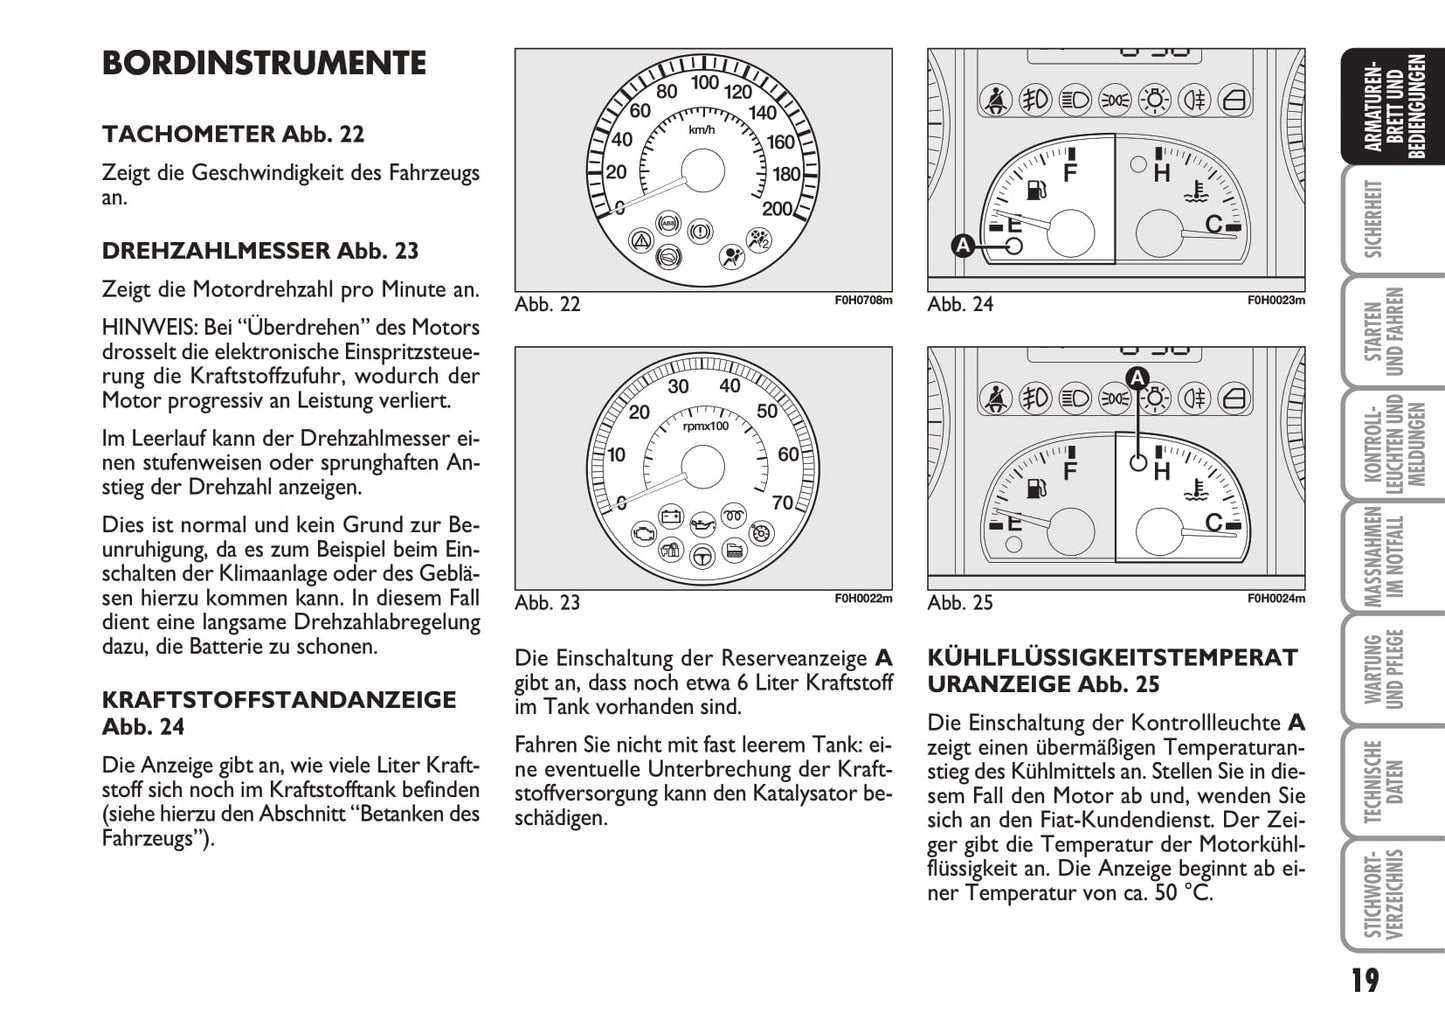 2010-2011 Fiat Idea Owner's Manual | German